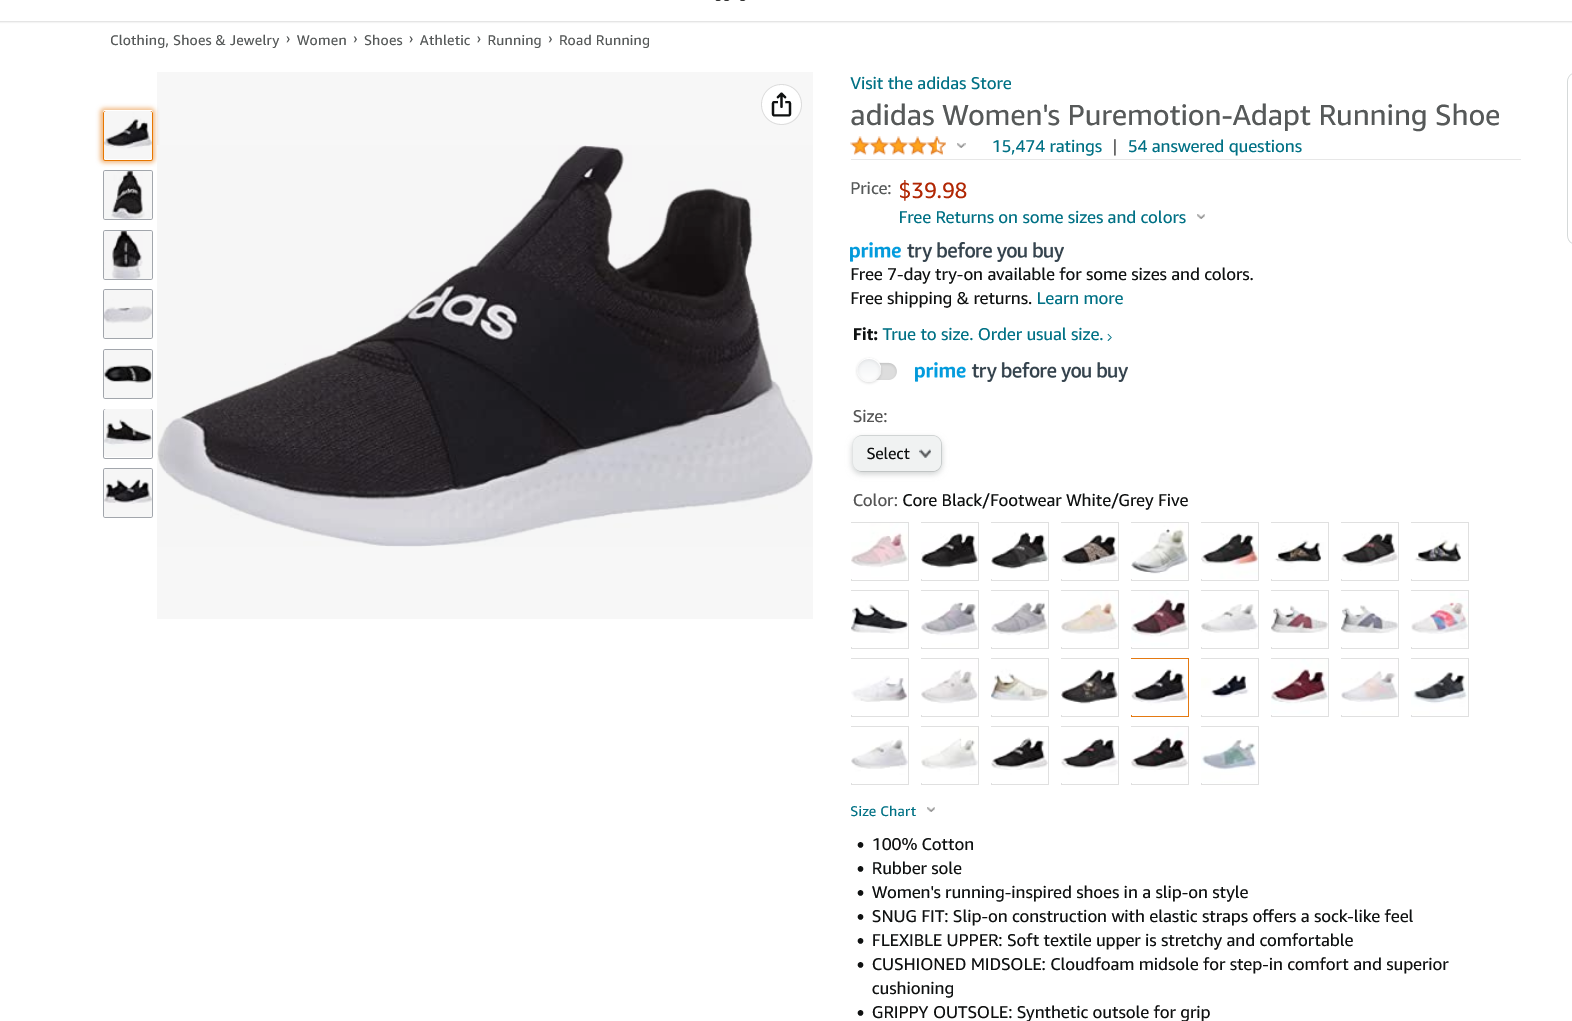 Screenshot 2022-11-26 at 10-55-42 Amazon.com adidas Women's Puremotion-Adapt Running Shoe Road...png